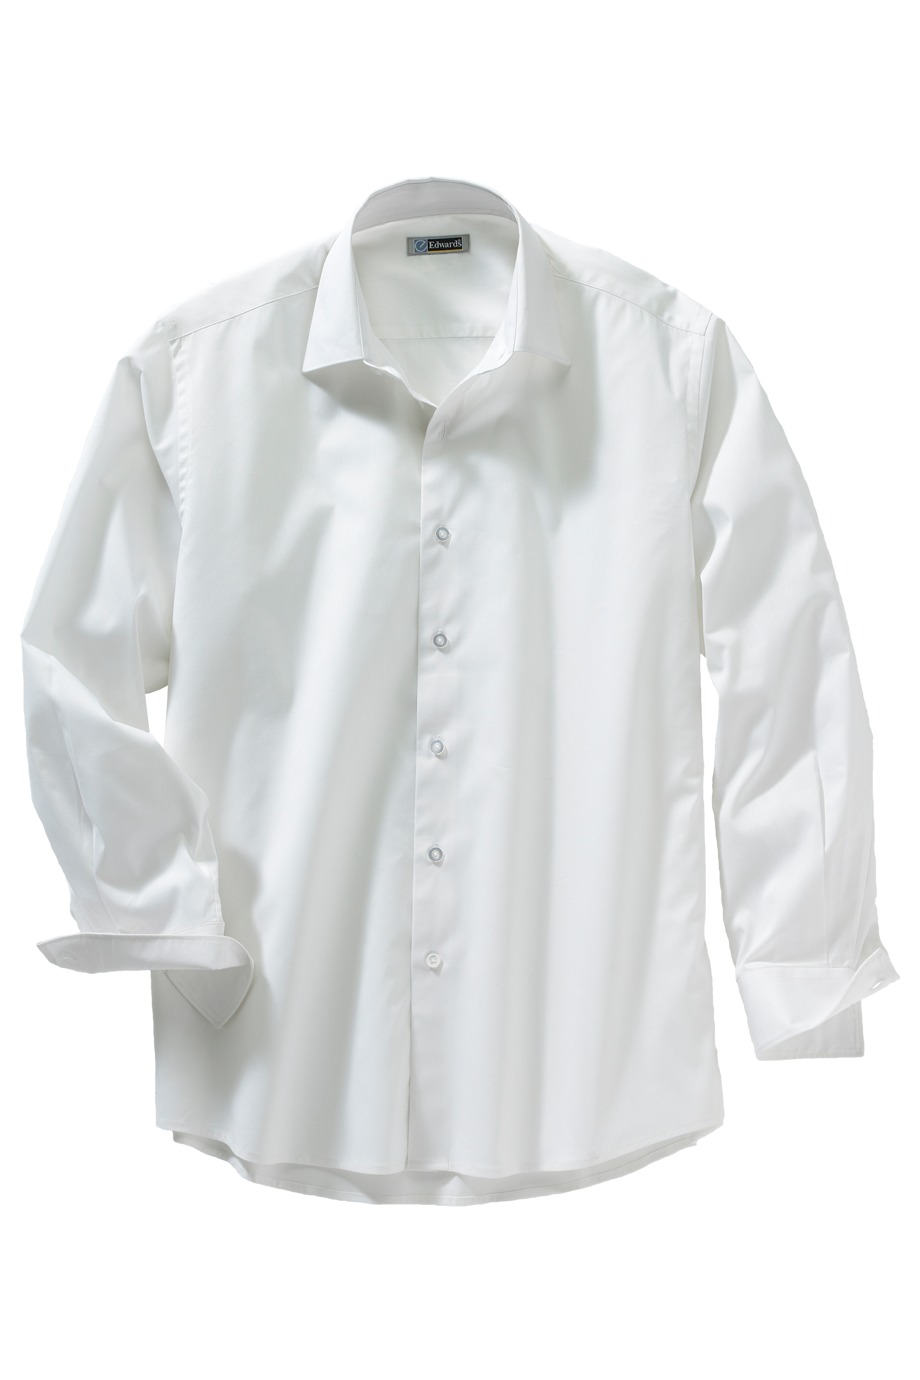 Edwards Garment 1033 - Spread Collar Dress Shirt